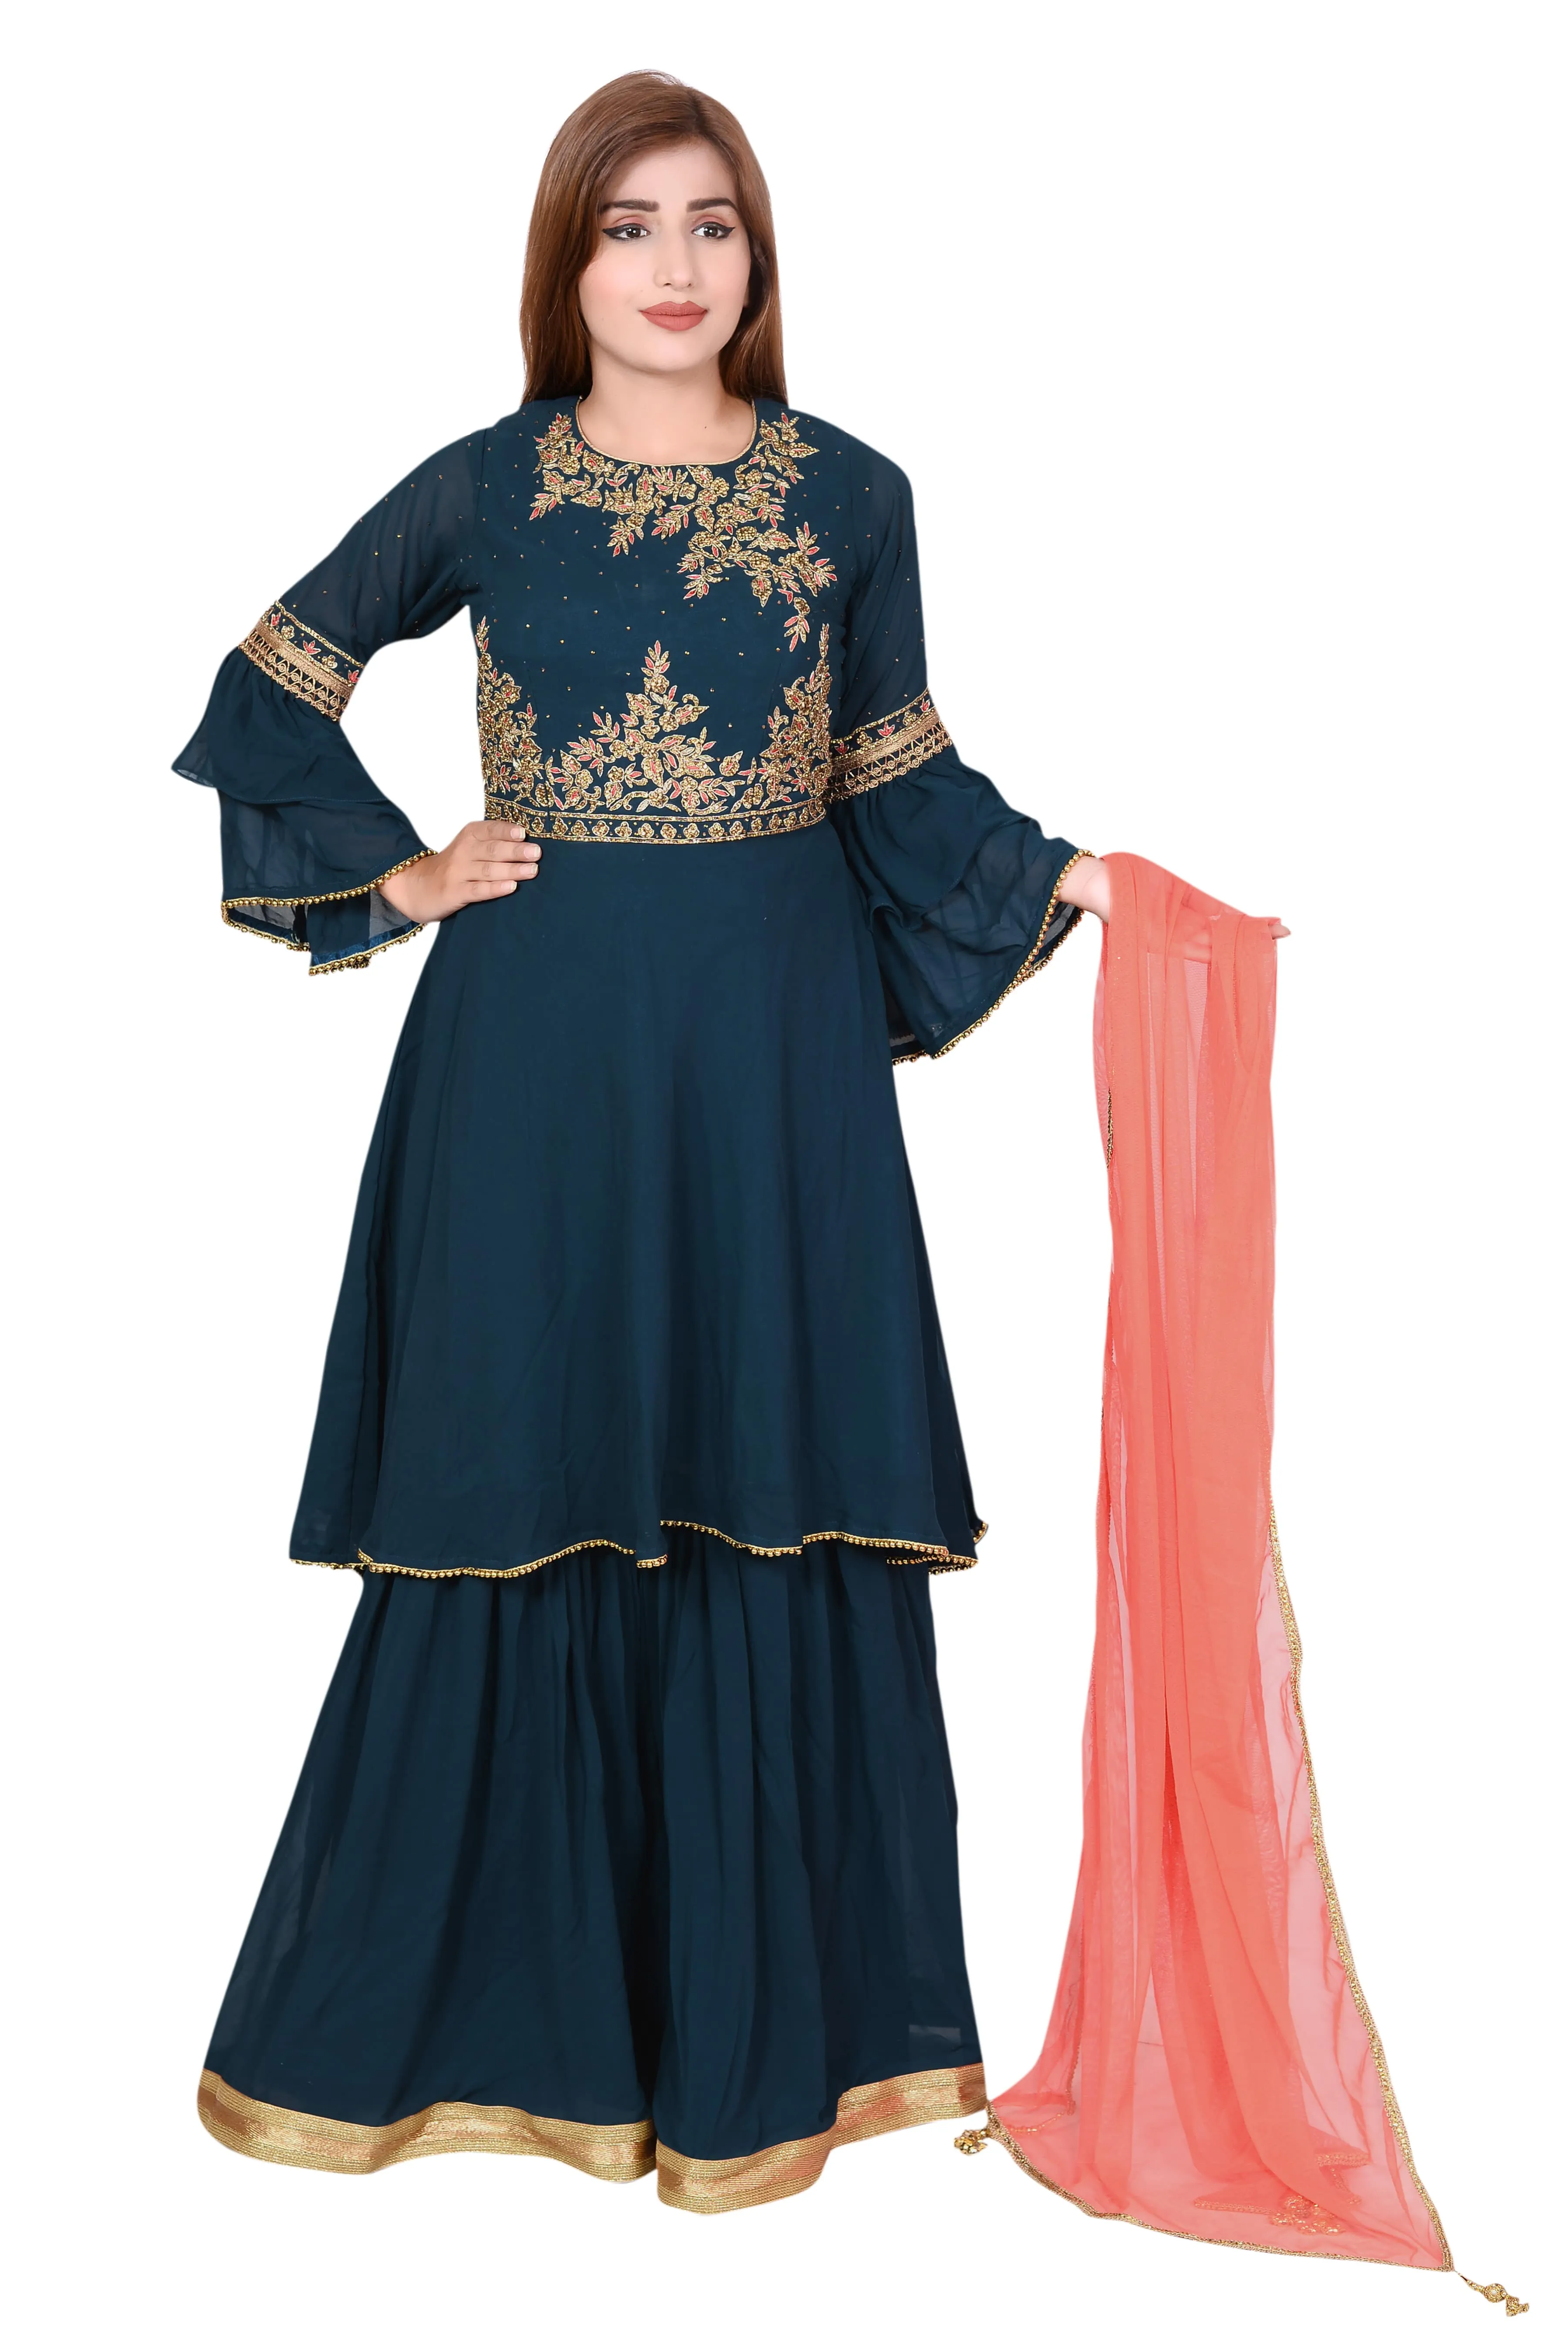 Buy Women Stylish Delhi to Amritsar Dress Material Purple at Amazon.in